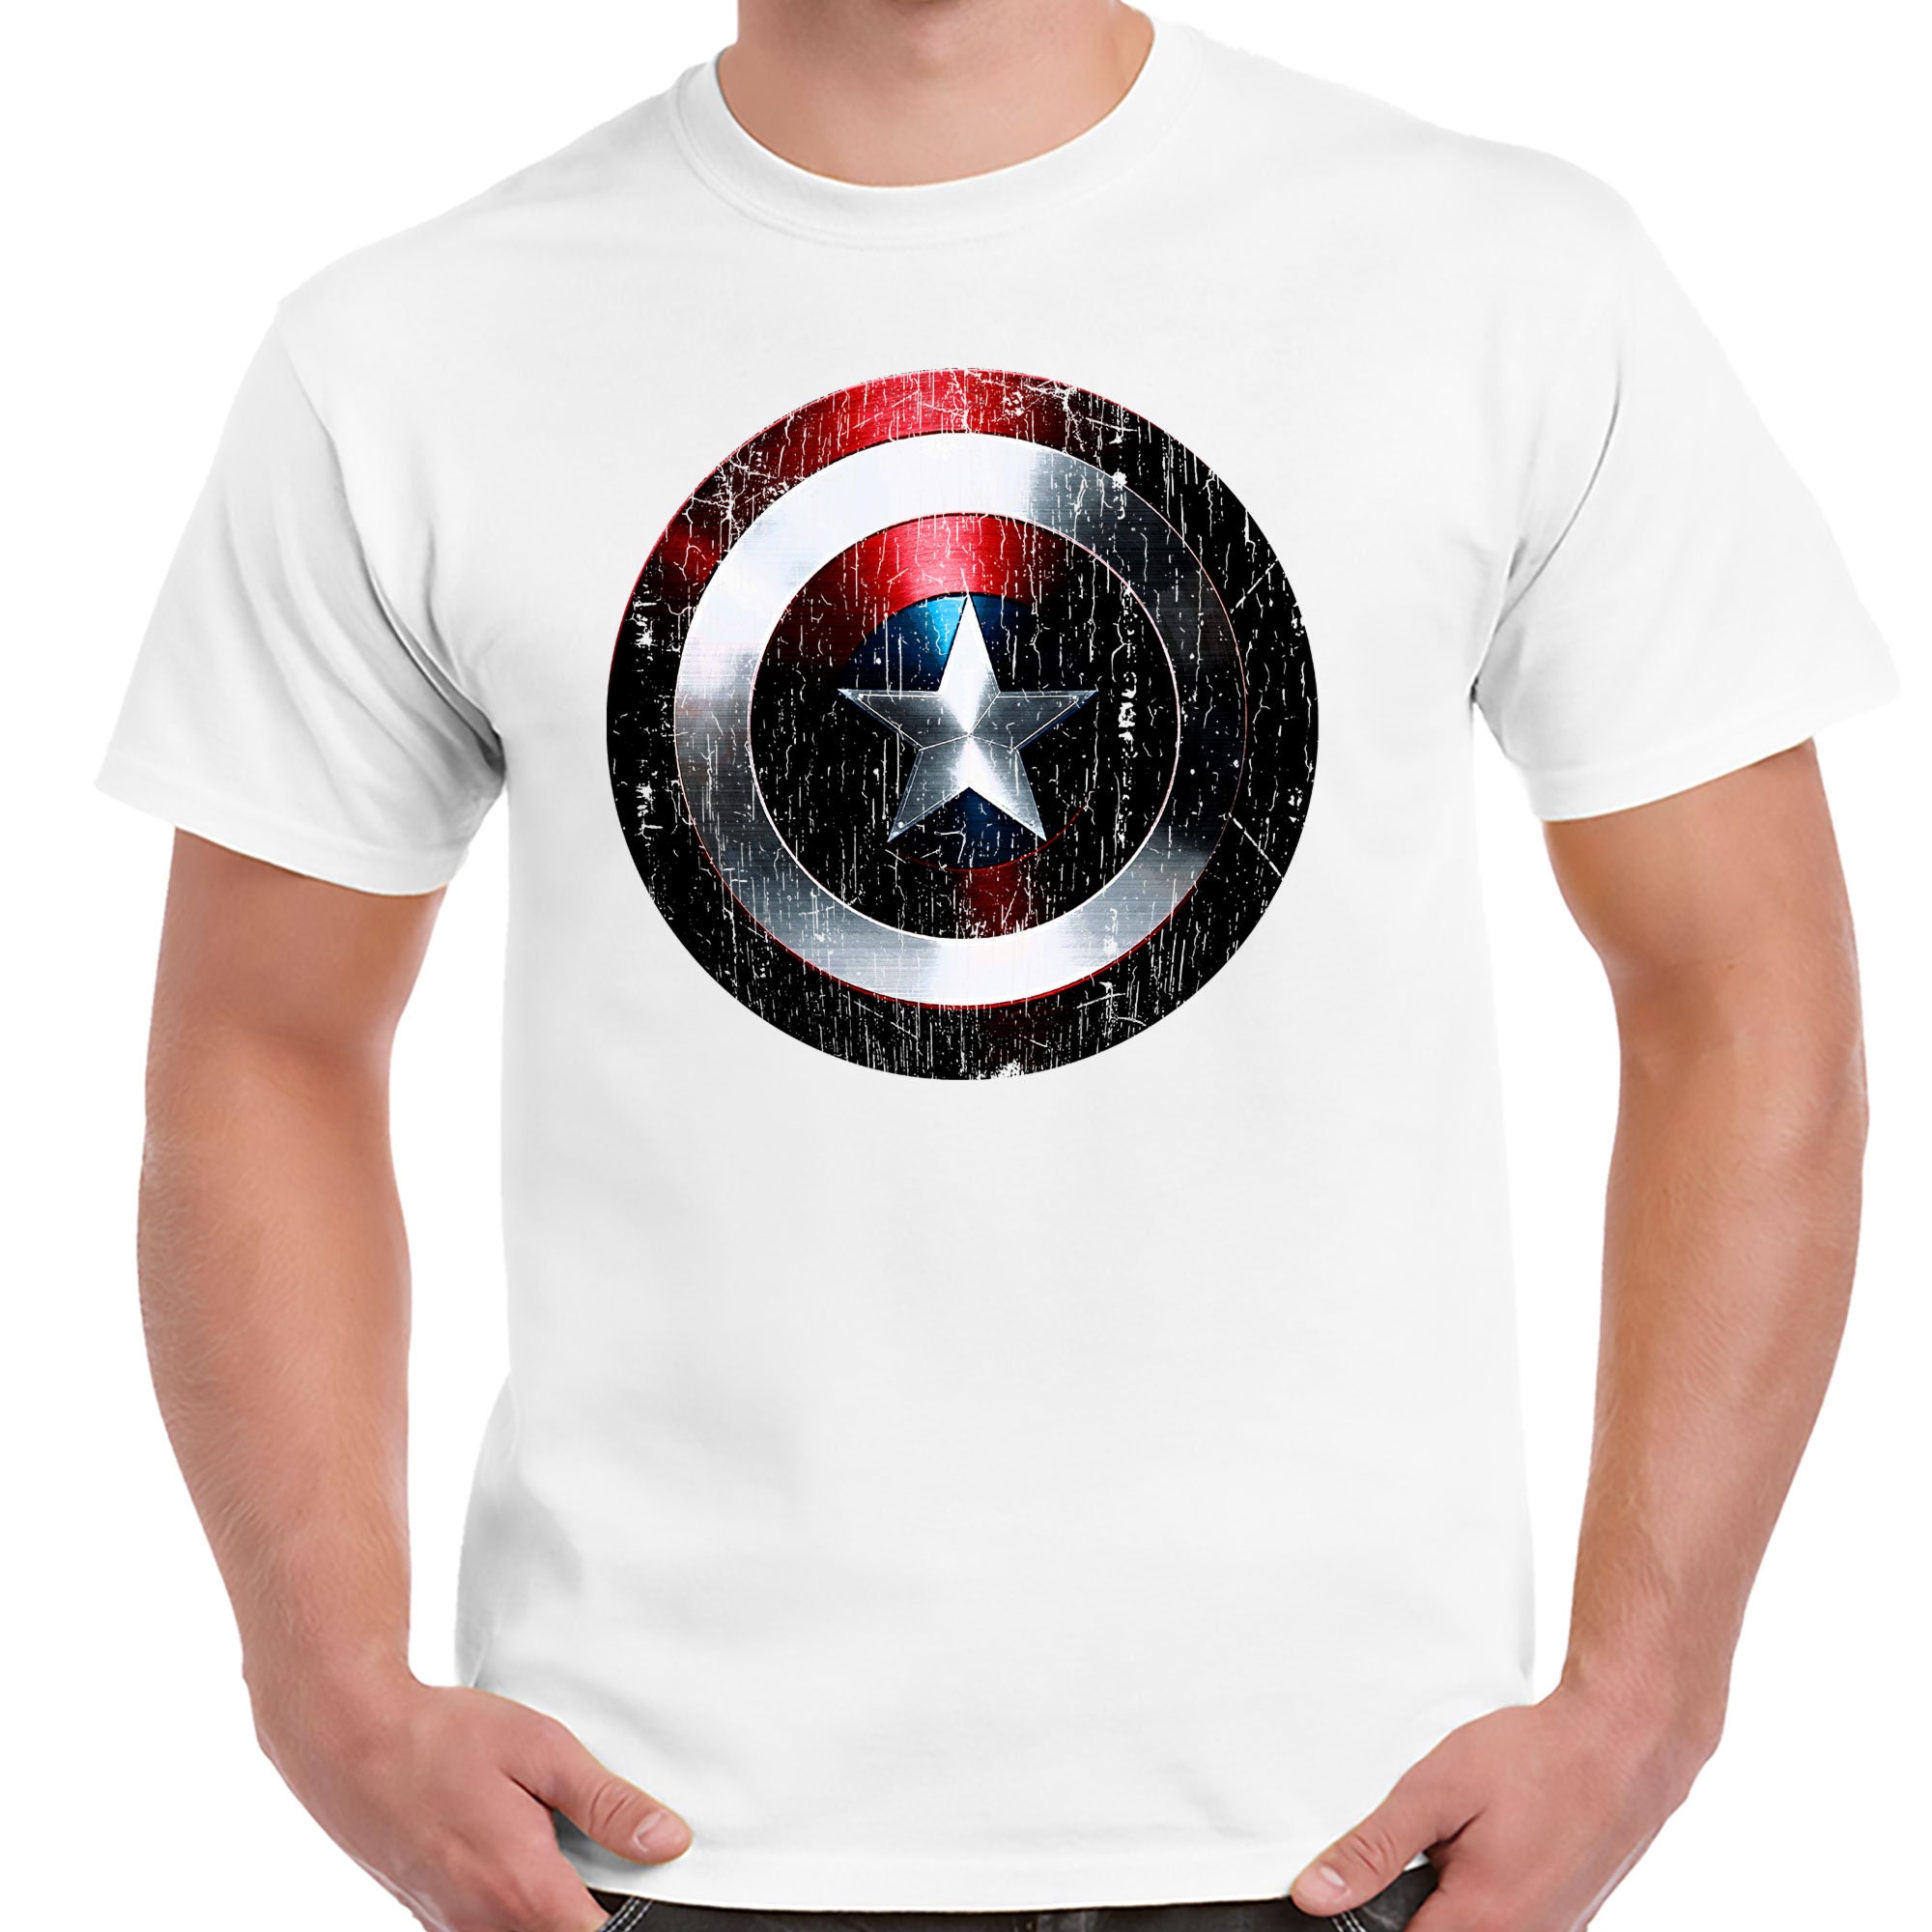 Футболка Капитан Америка. Captain футболка со значками. Captain adidas футболка со значками. American Tshirt Design.